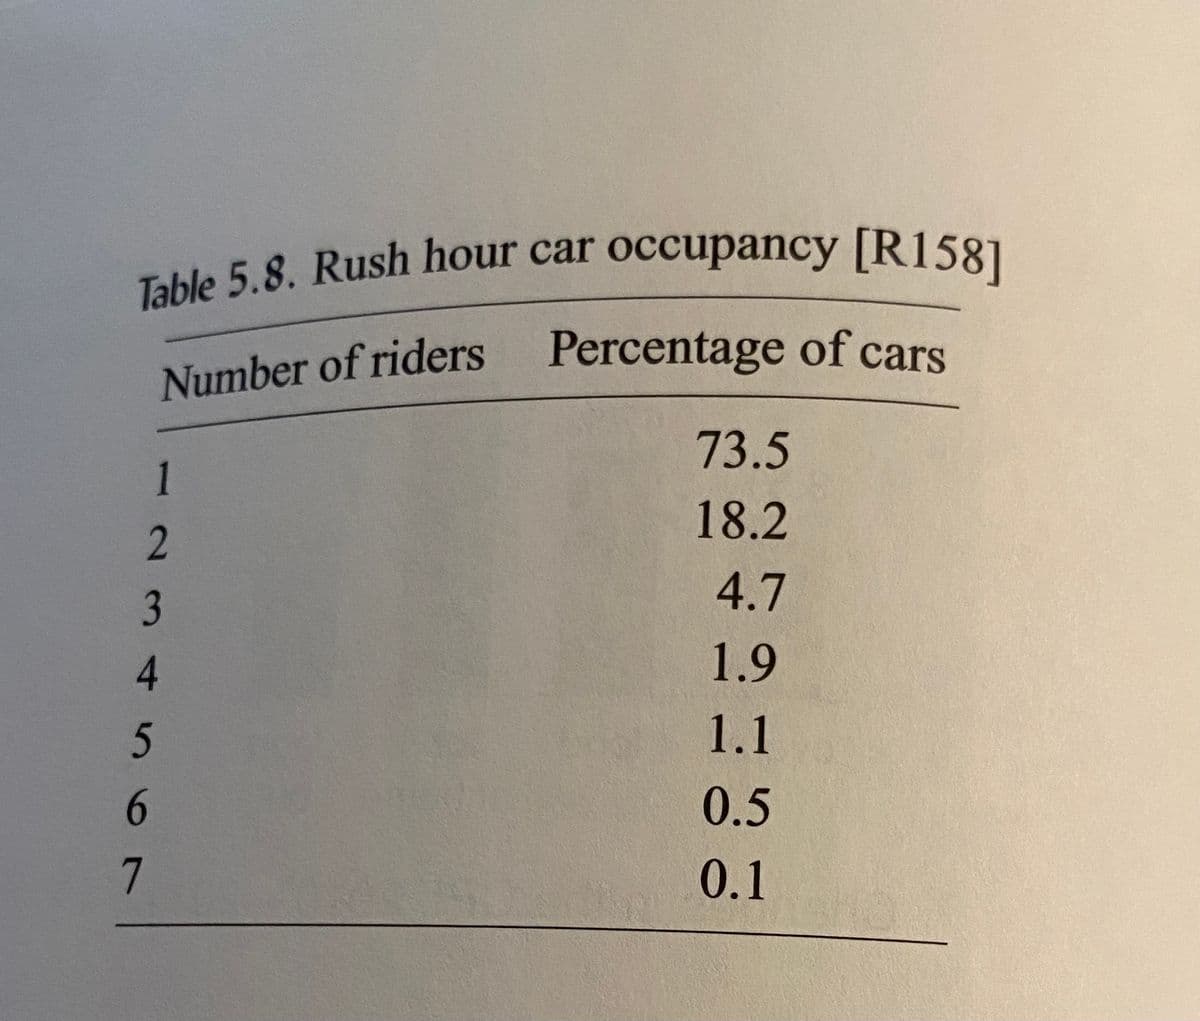 Table 5.8. Rush hour car occupancy [R158]
Table 5.8. Rush hour car occupancy [R1581
Percentage of cars
Number of riders
73.5
1
18.2
4.7
4.
1.9
1.1
6.
0.5
7
0.1
